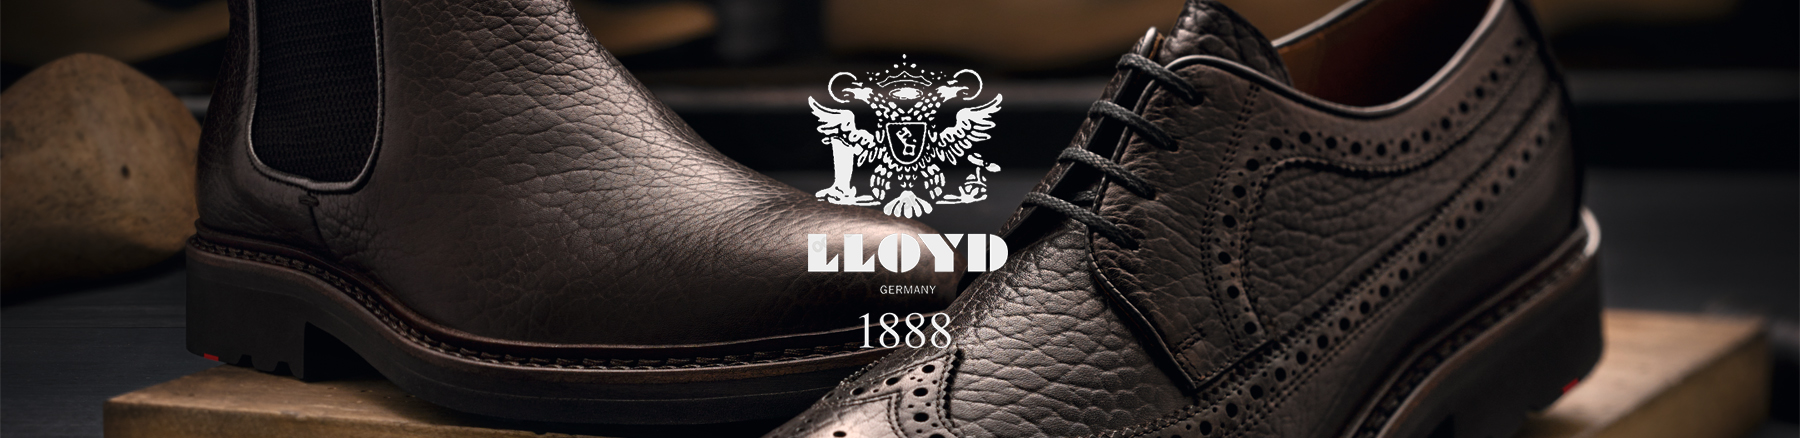 LLOYD 1888 Premium Collection